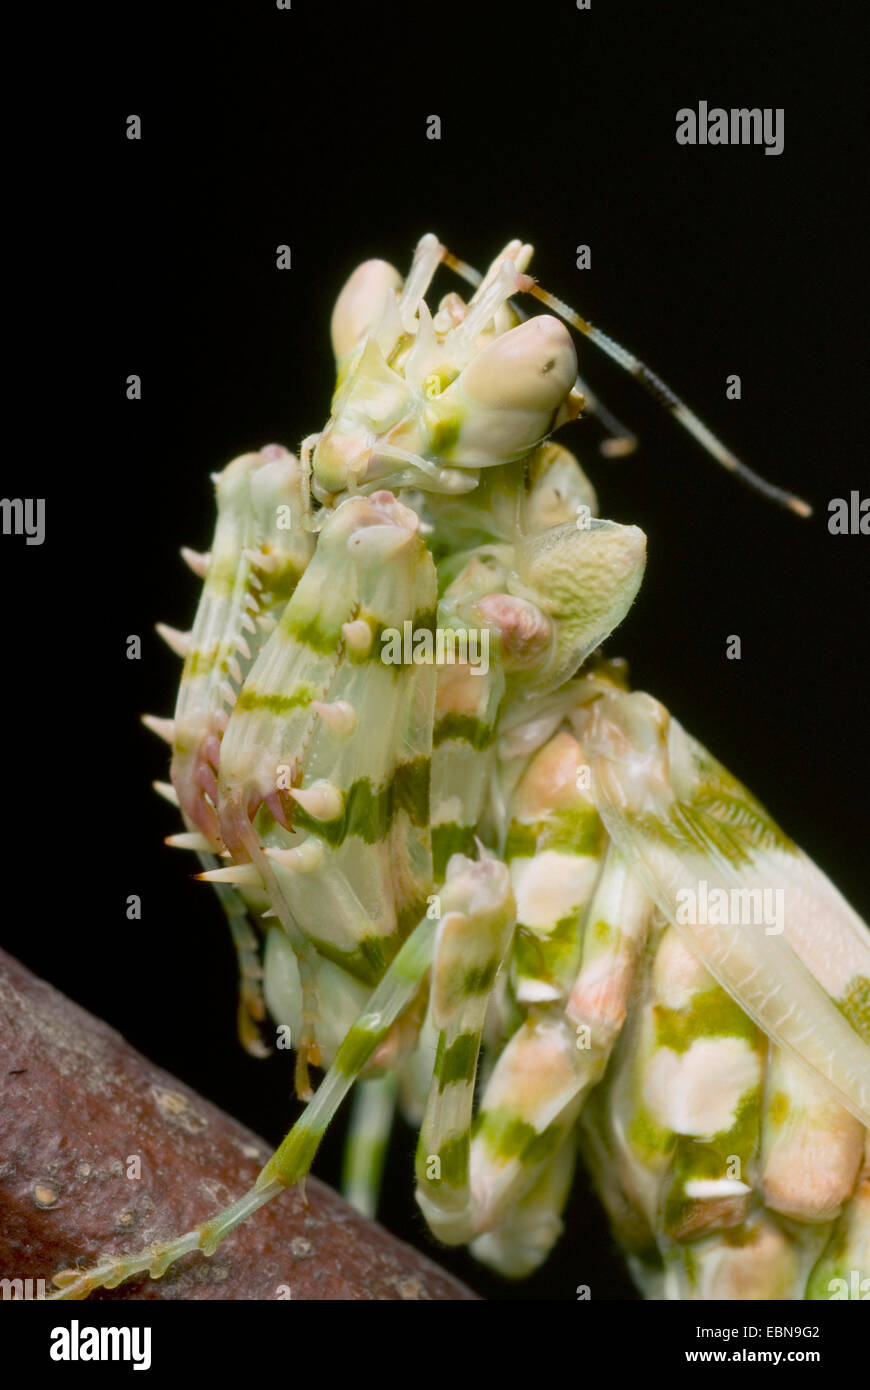 Wahlbergi del fiore spinoso Mantis, Wahlbergis fiore spinoso Mantis (Pseudocreobotra wahlbergi), ritratto Foto Stock